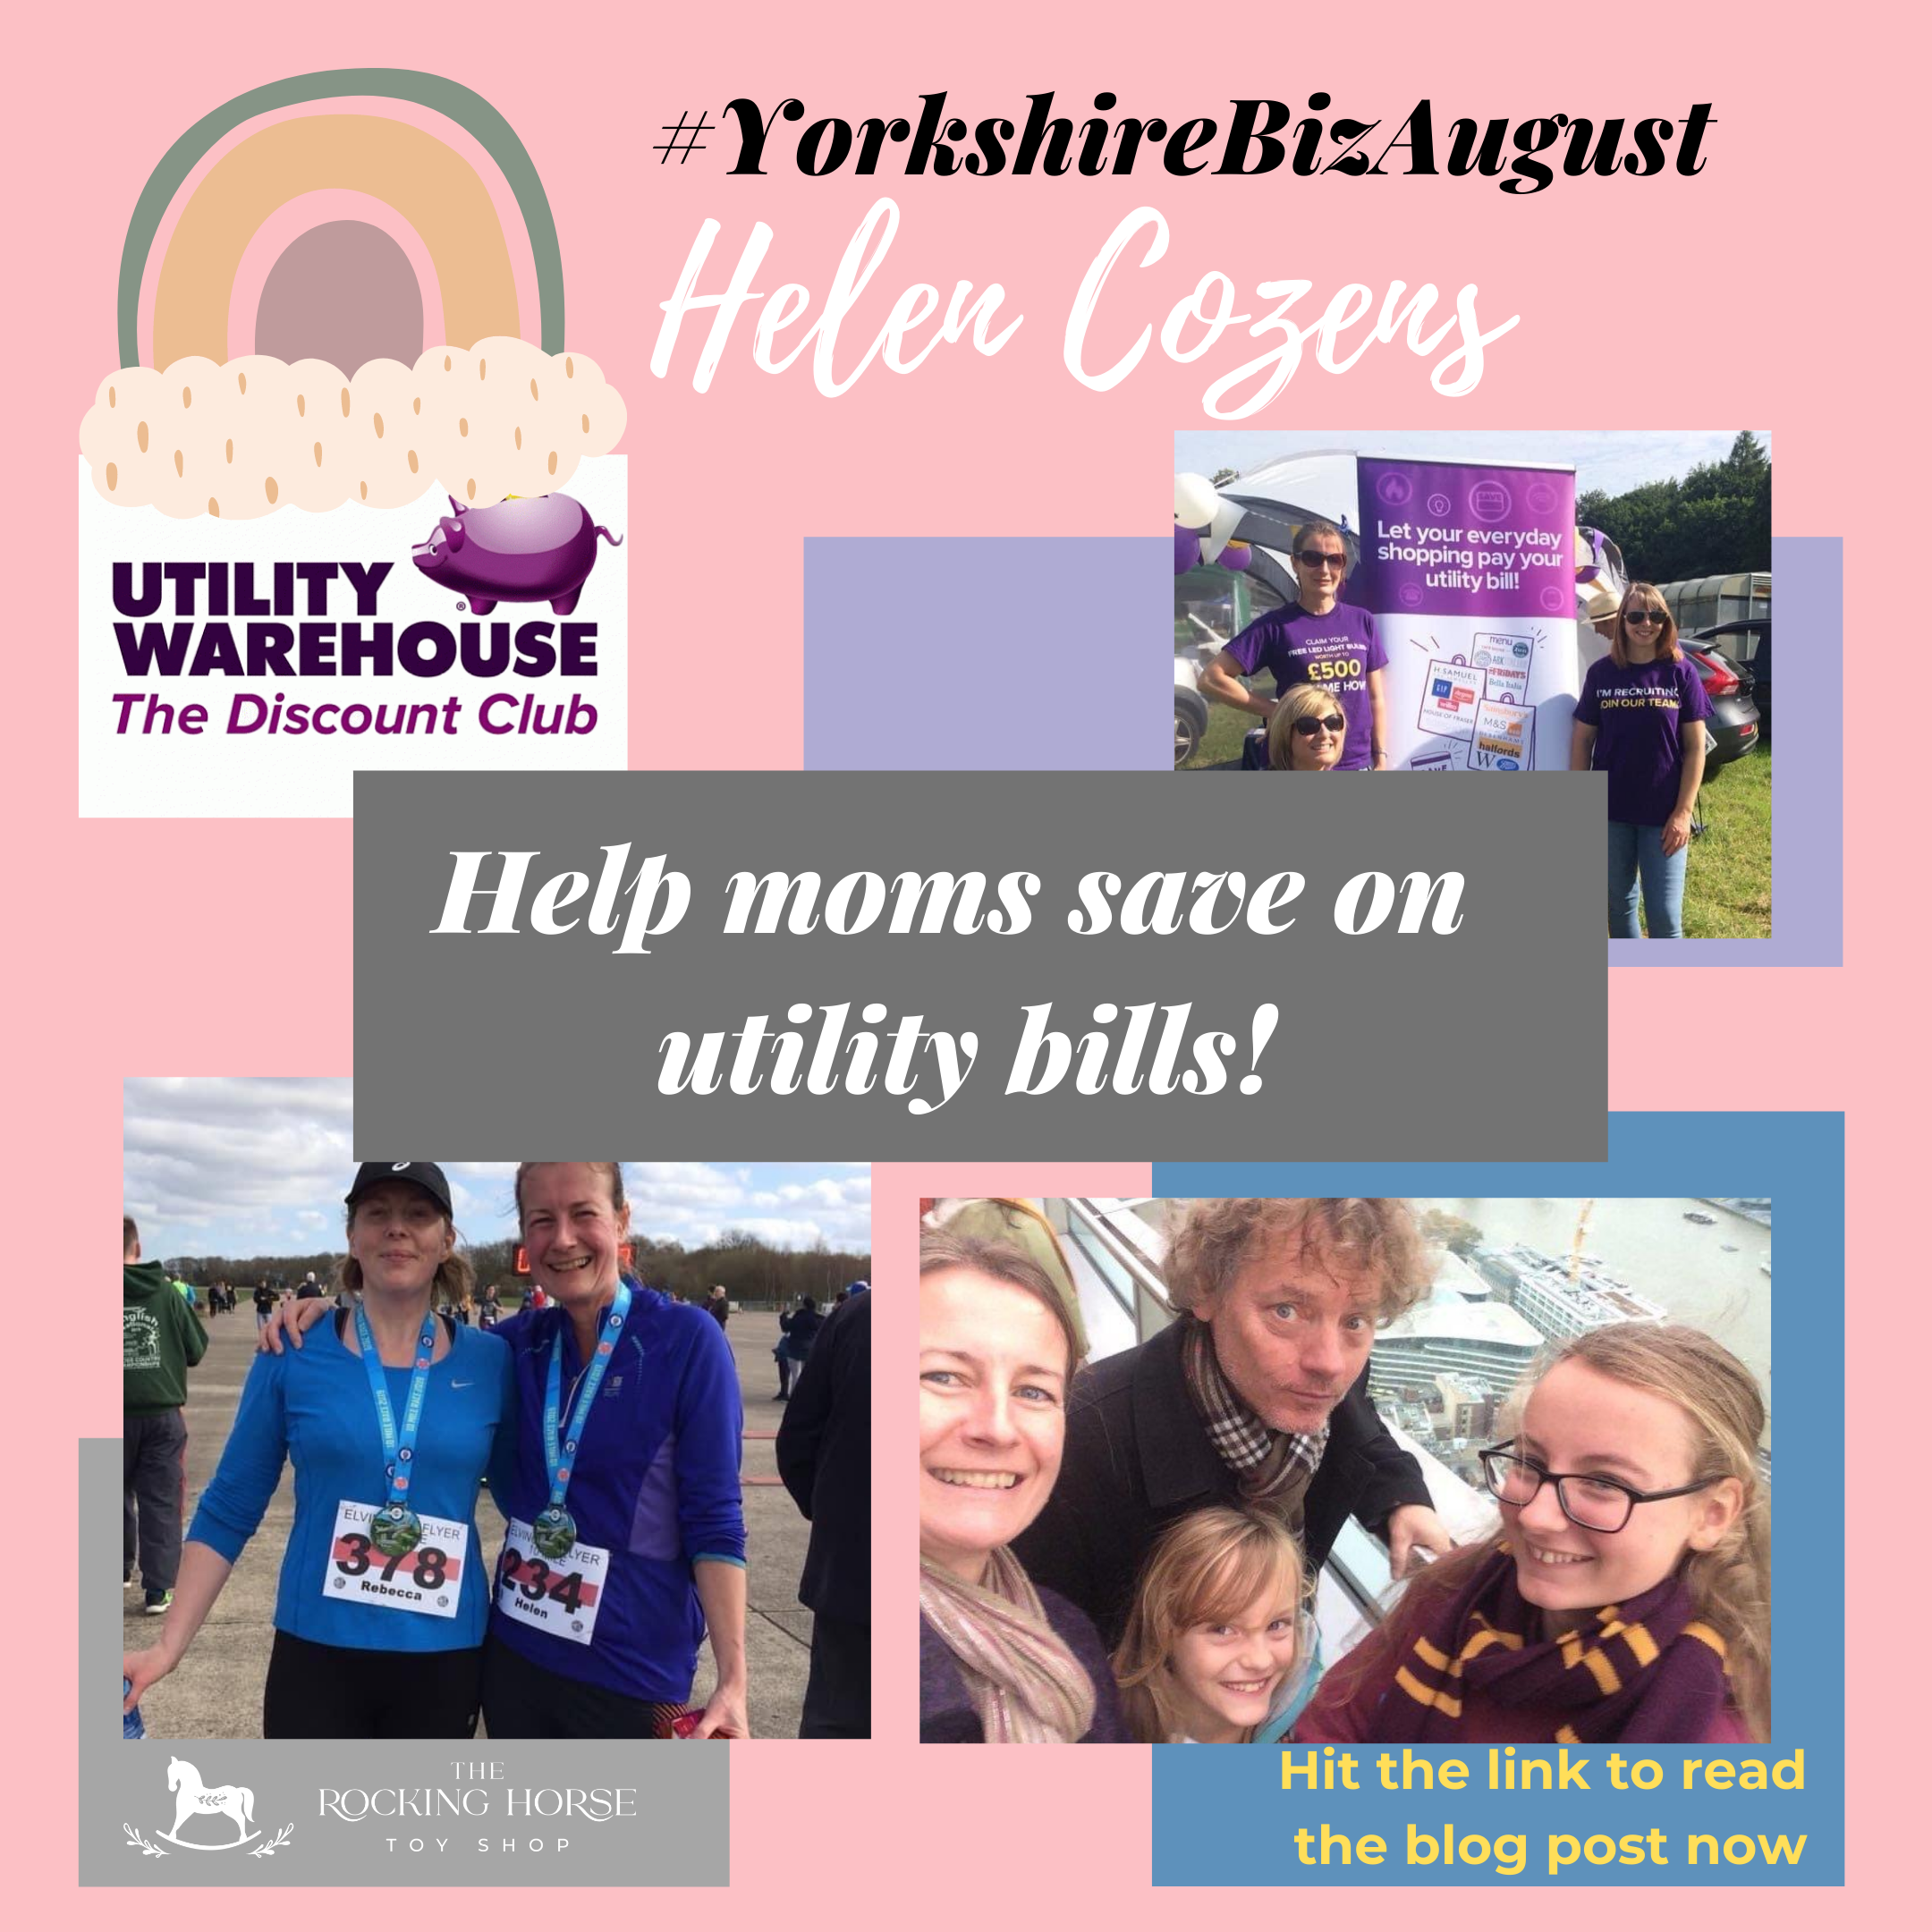 Yorkshire Biz August 01 - Helen Cozens - Utility Warehouse - The Discount Club